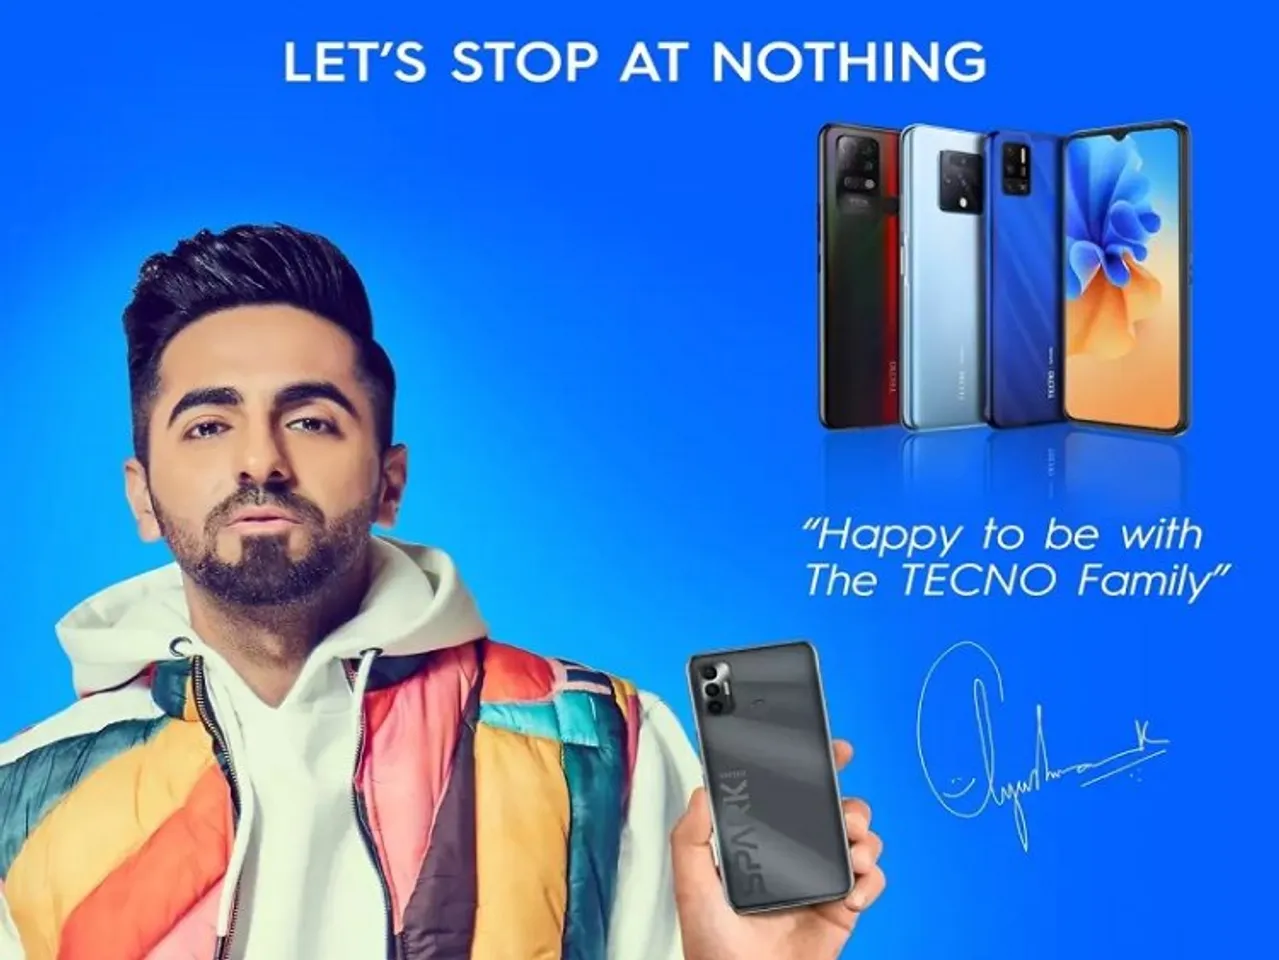 Ayushman Khurrana as brand ambassador of Tecno mobile India